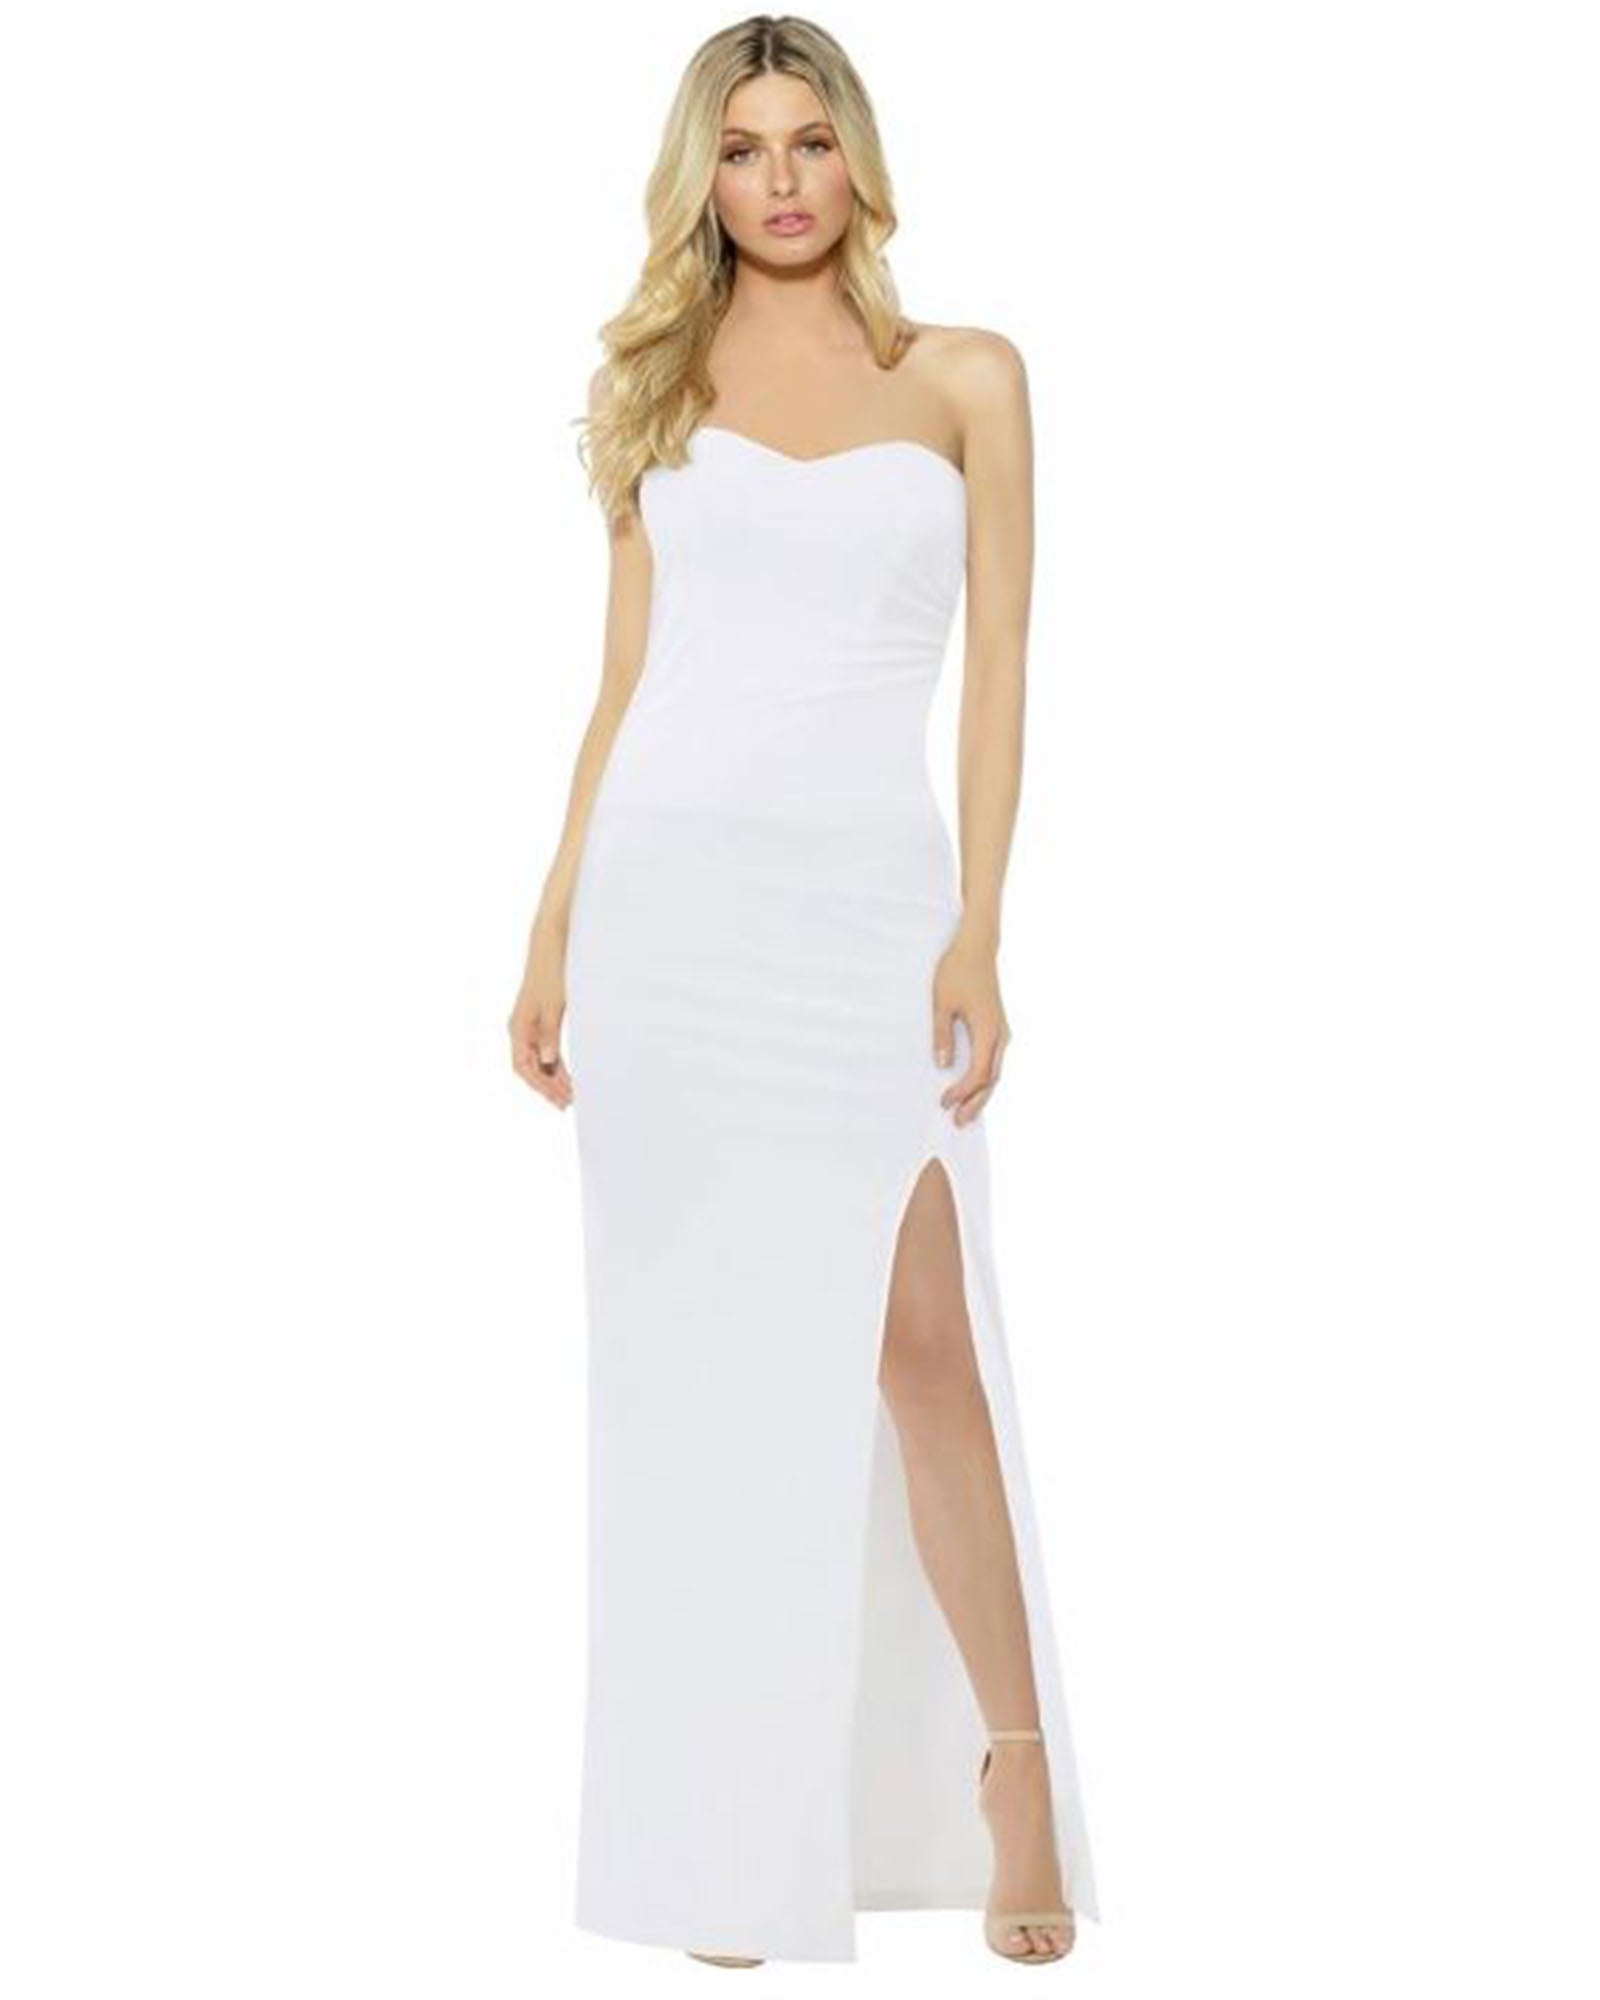 Strapless Evening Dress - White